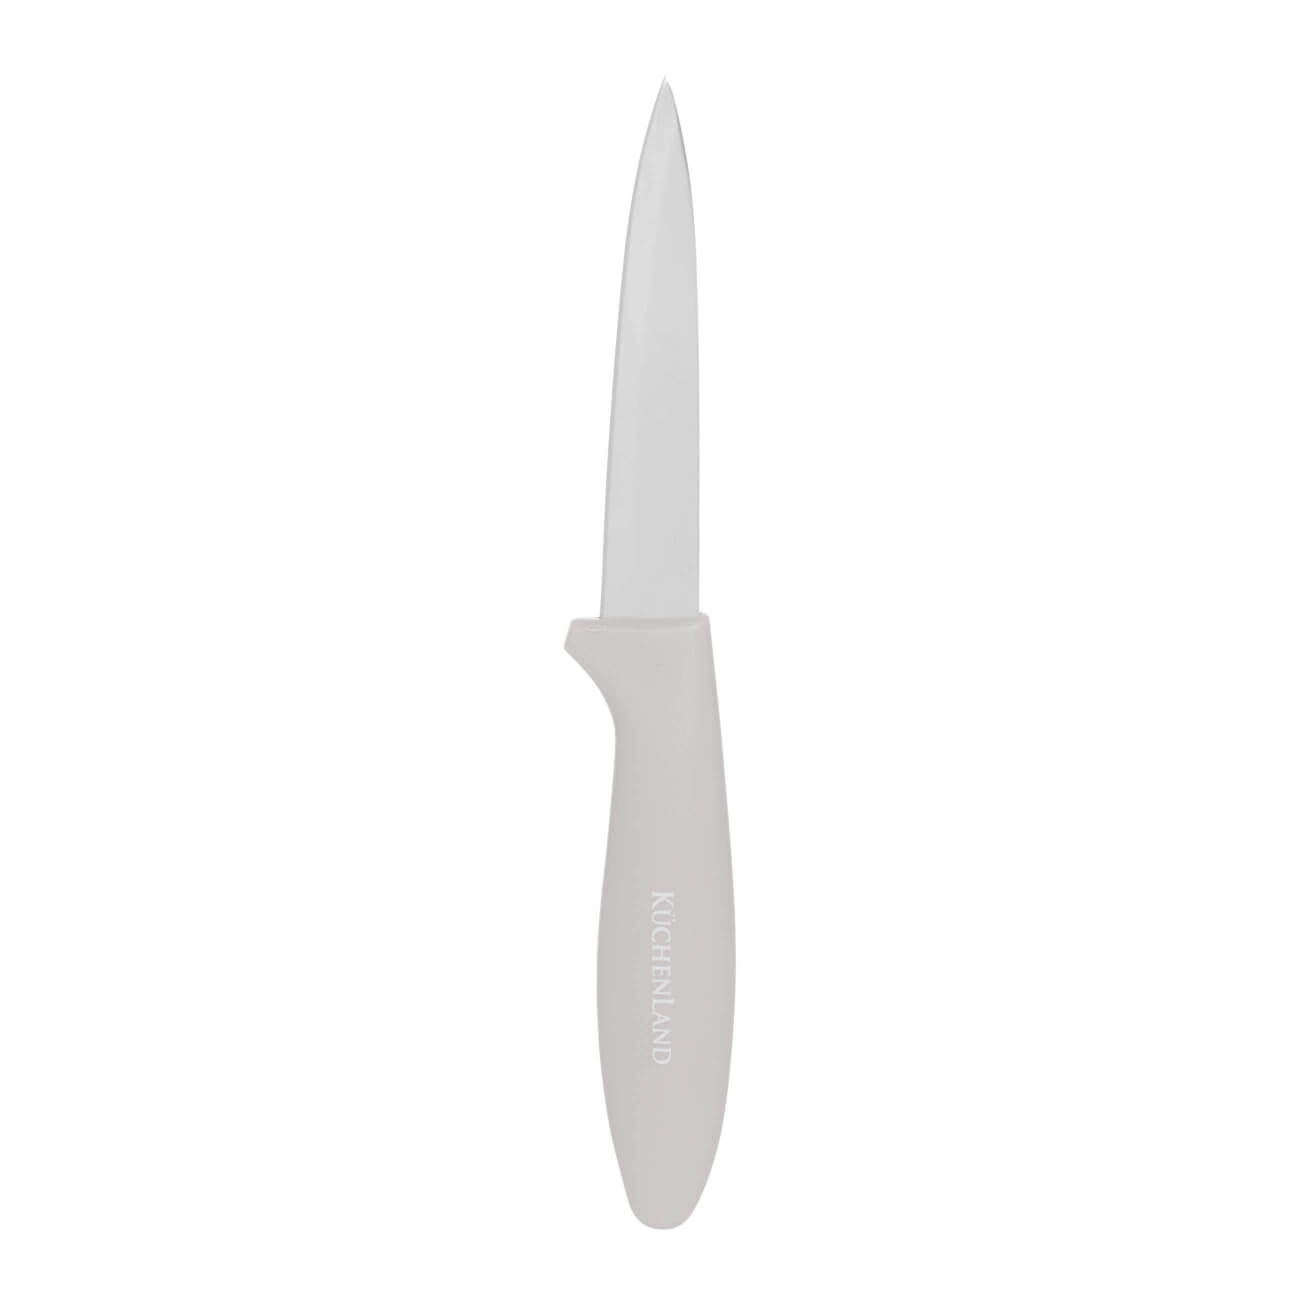 Нож для чистки овощей, 9 см, сталь/пластик, серо-коричневый, Regular нож для овощей mallony